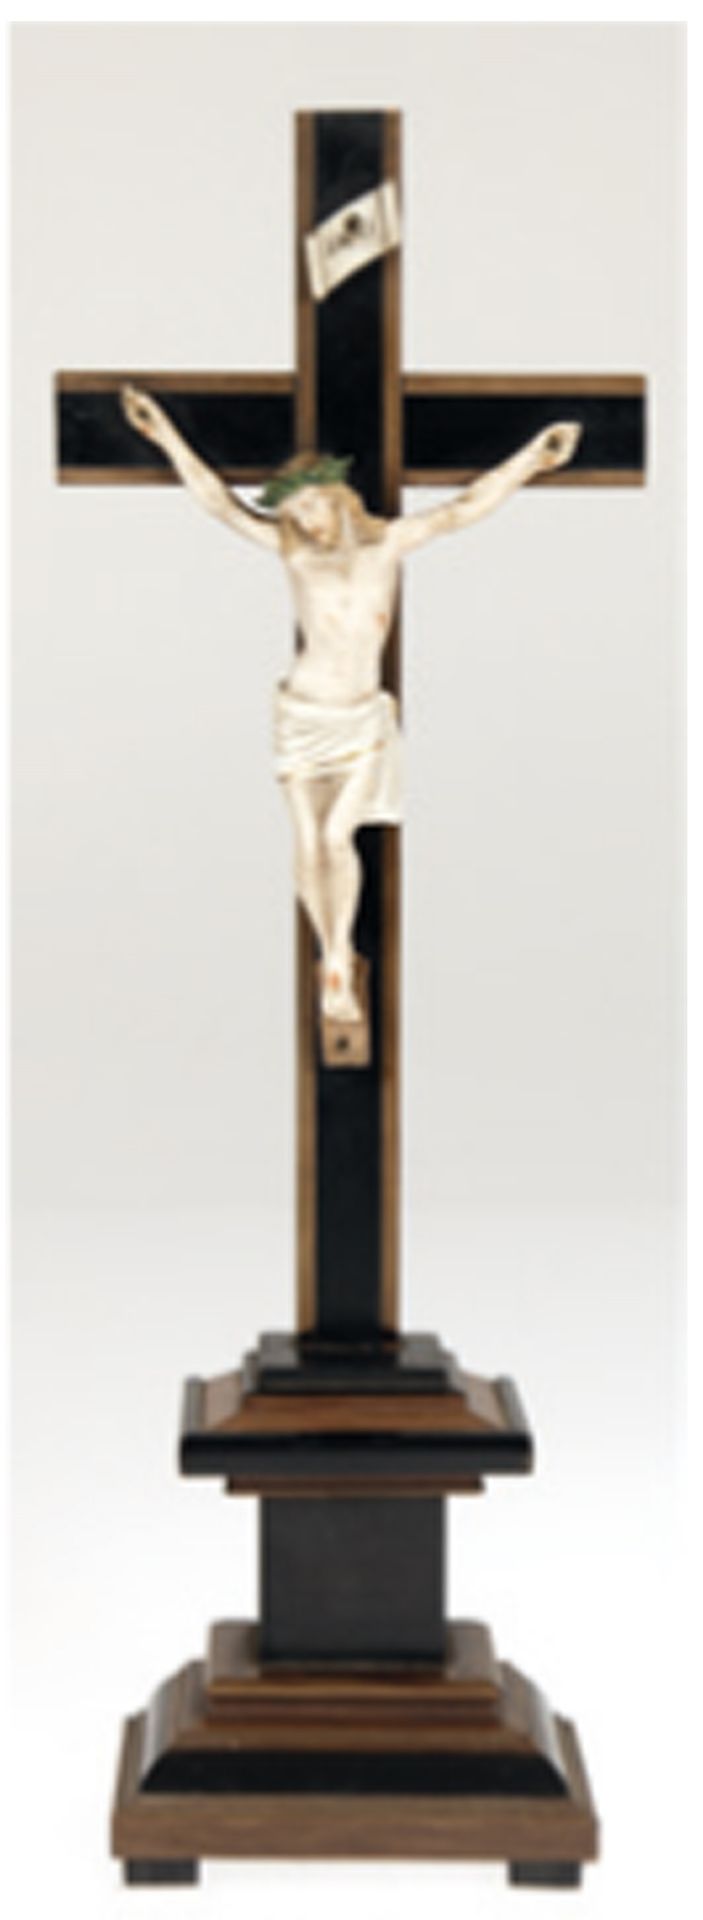 Altarkreuz "Christus am Kreuz", um 1920, Biskuitporzellan/ Holz, rechter Arm rep., Gebrauchspuren, 